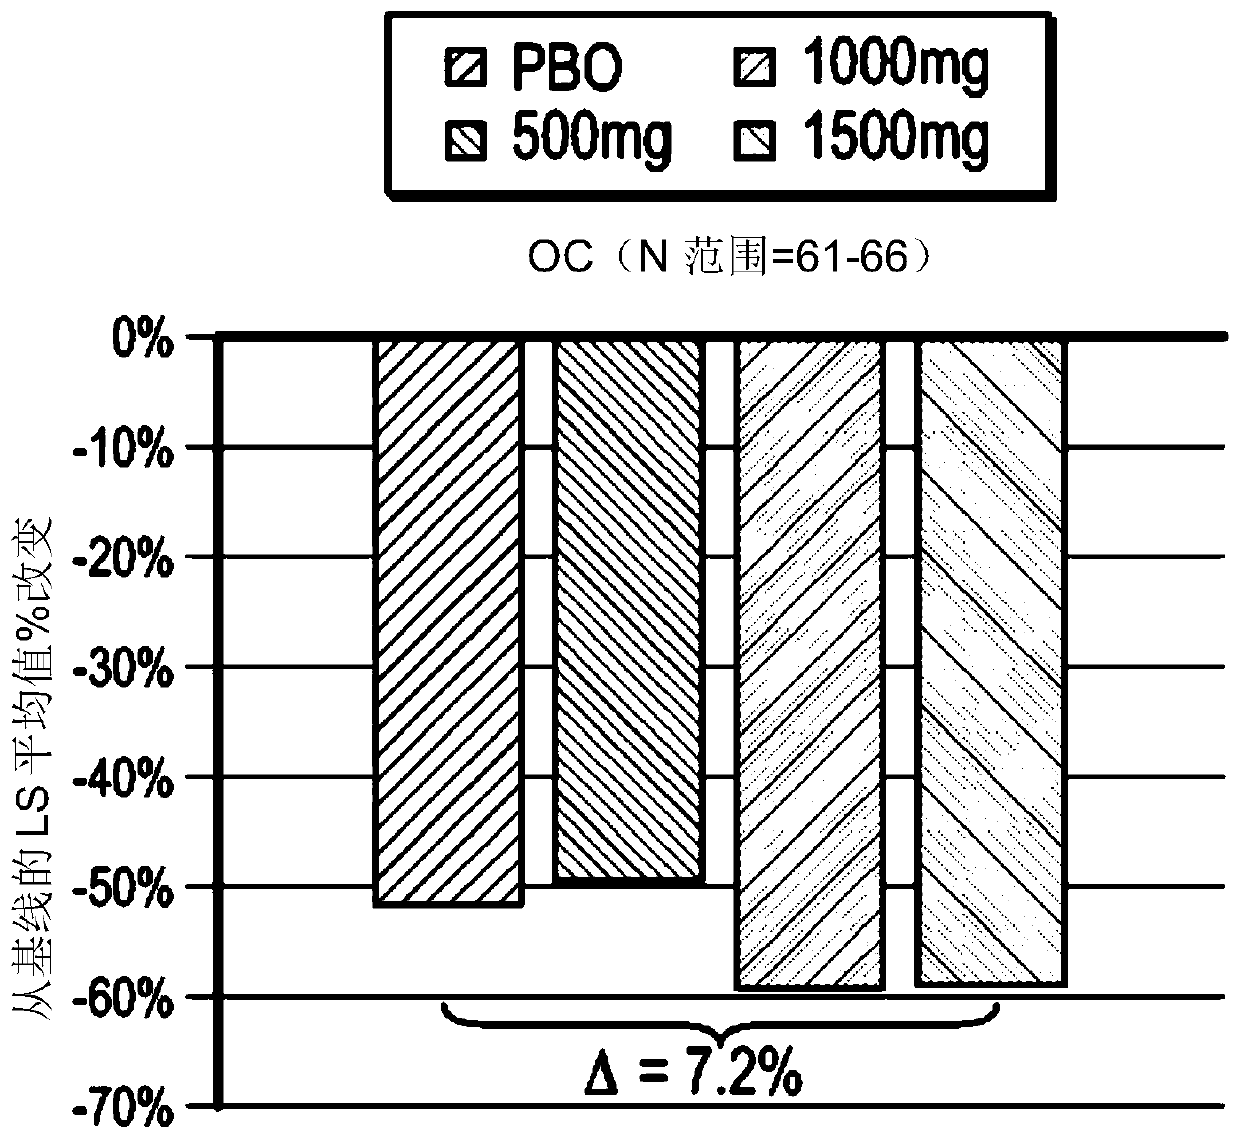 Efficacy of a gastro-retentive bile acid sequestrant dosage form